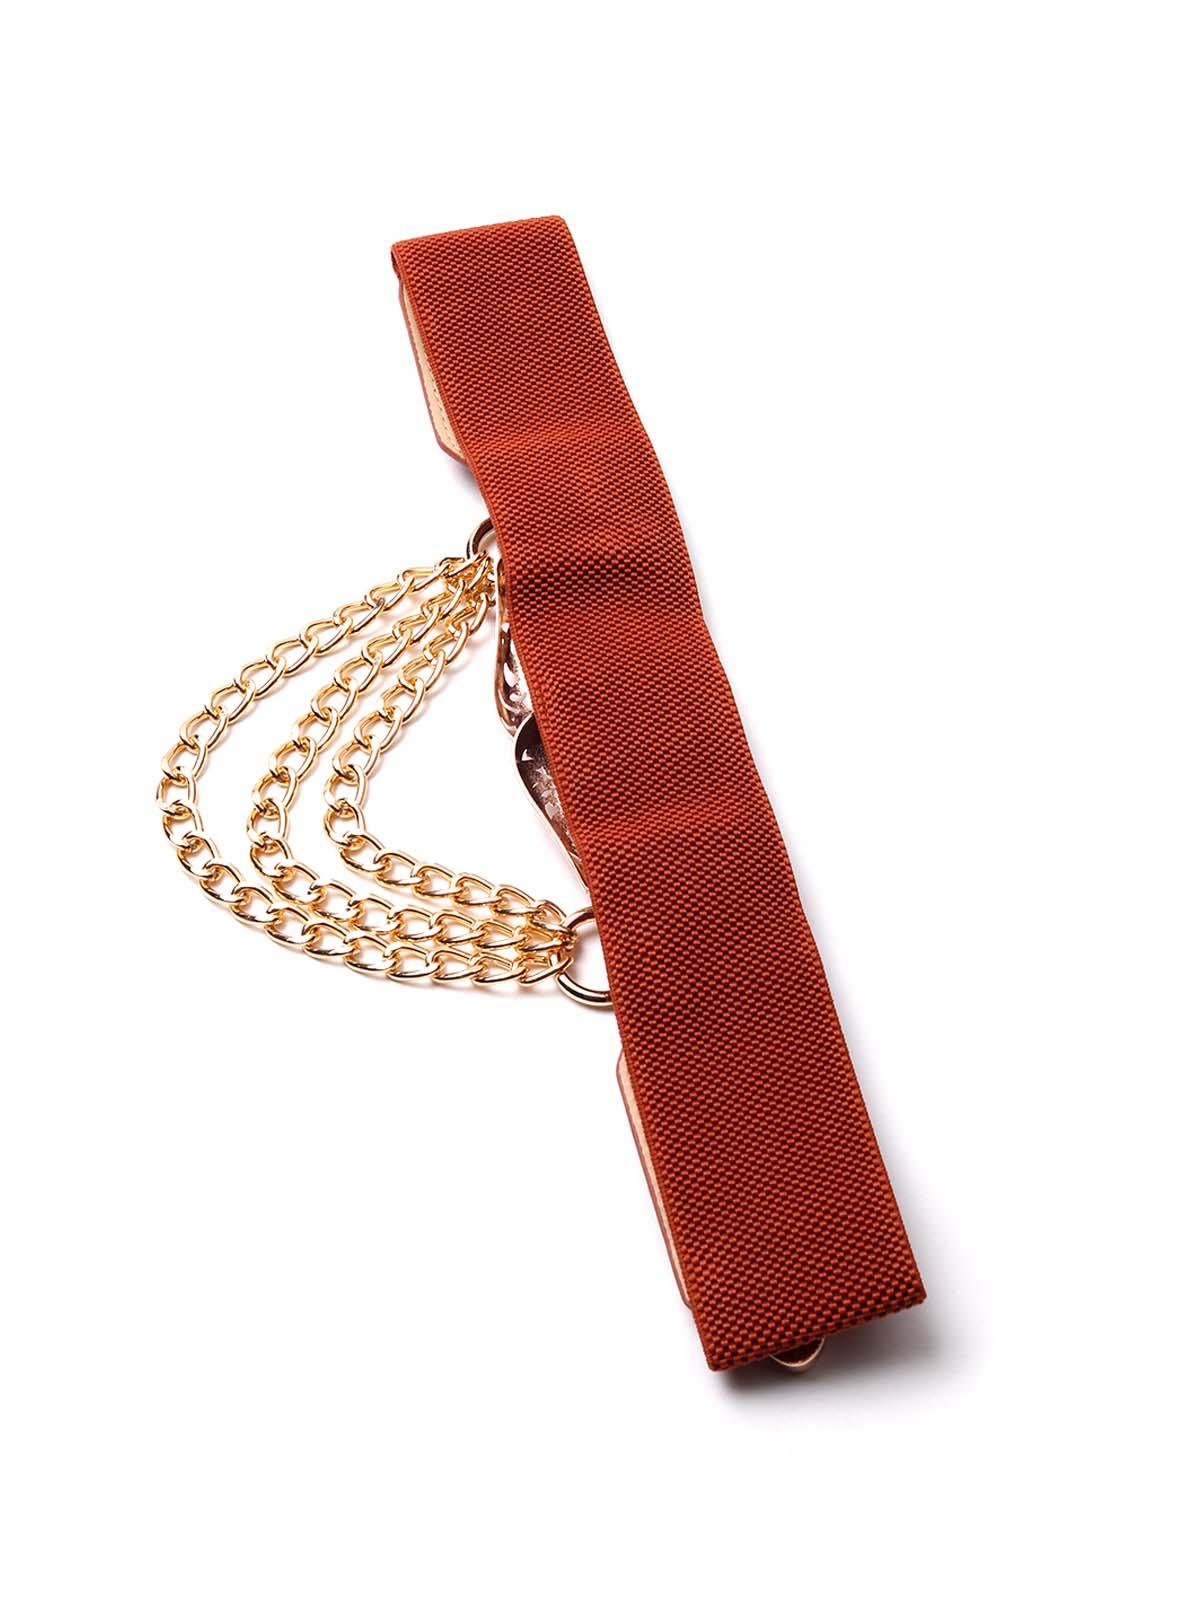 Tan belt adorned with a golden chain - Odette